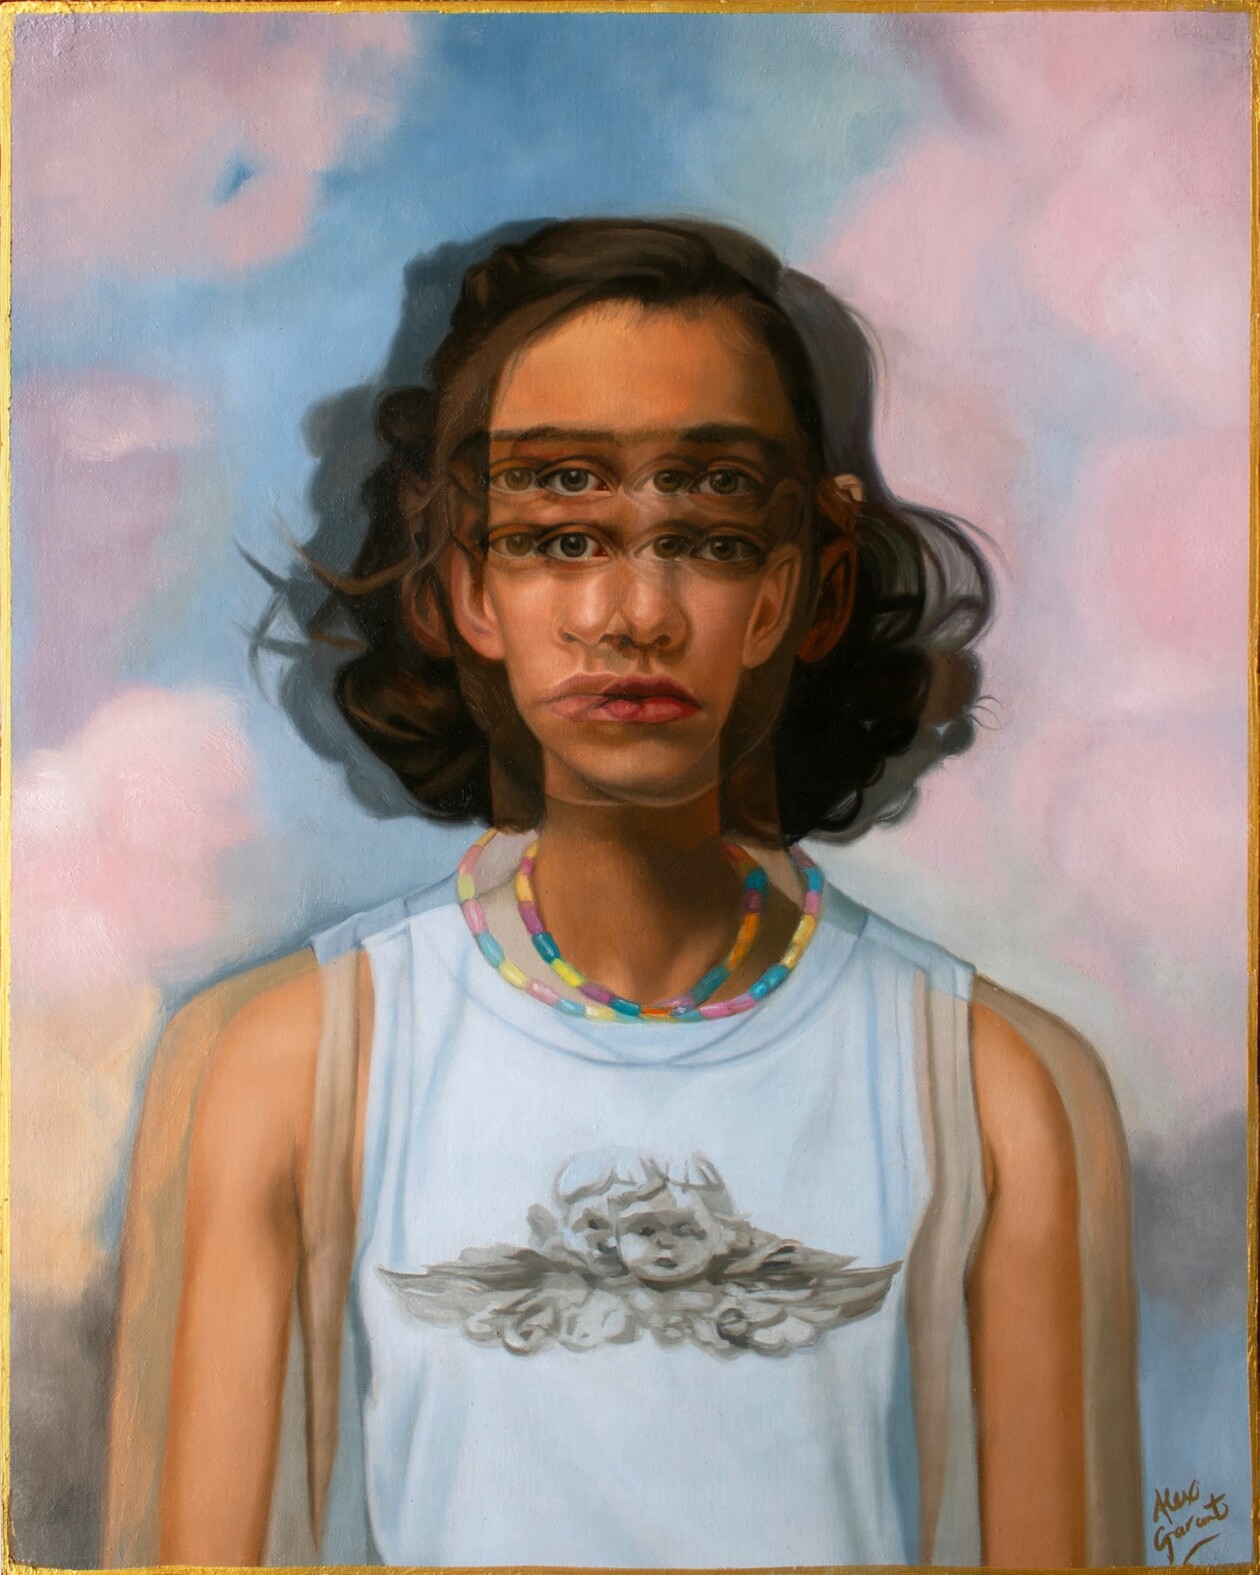 Alex Garant Overlaps Repeated Female Figures To Create Unique And Hypnotizing Portrait Paintings (4)